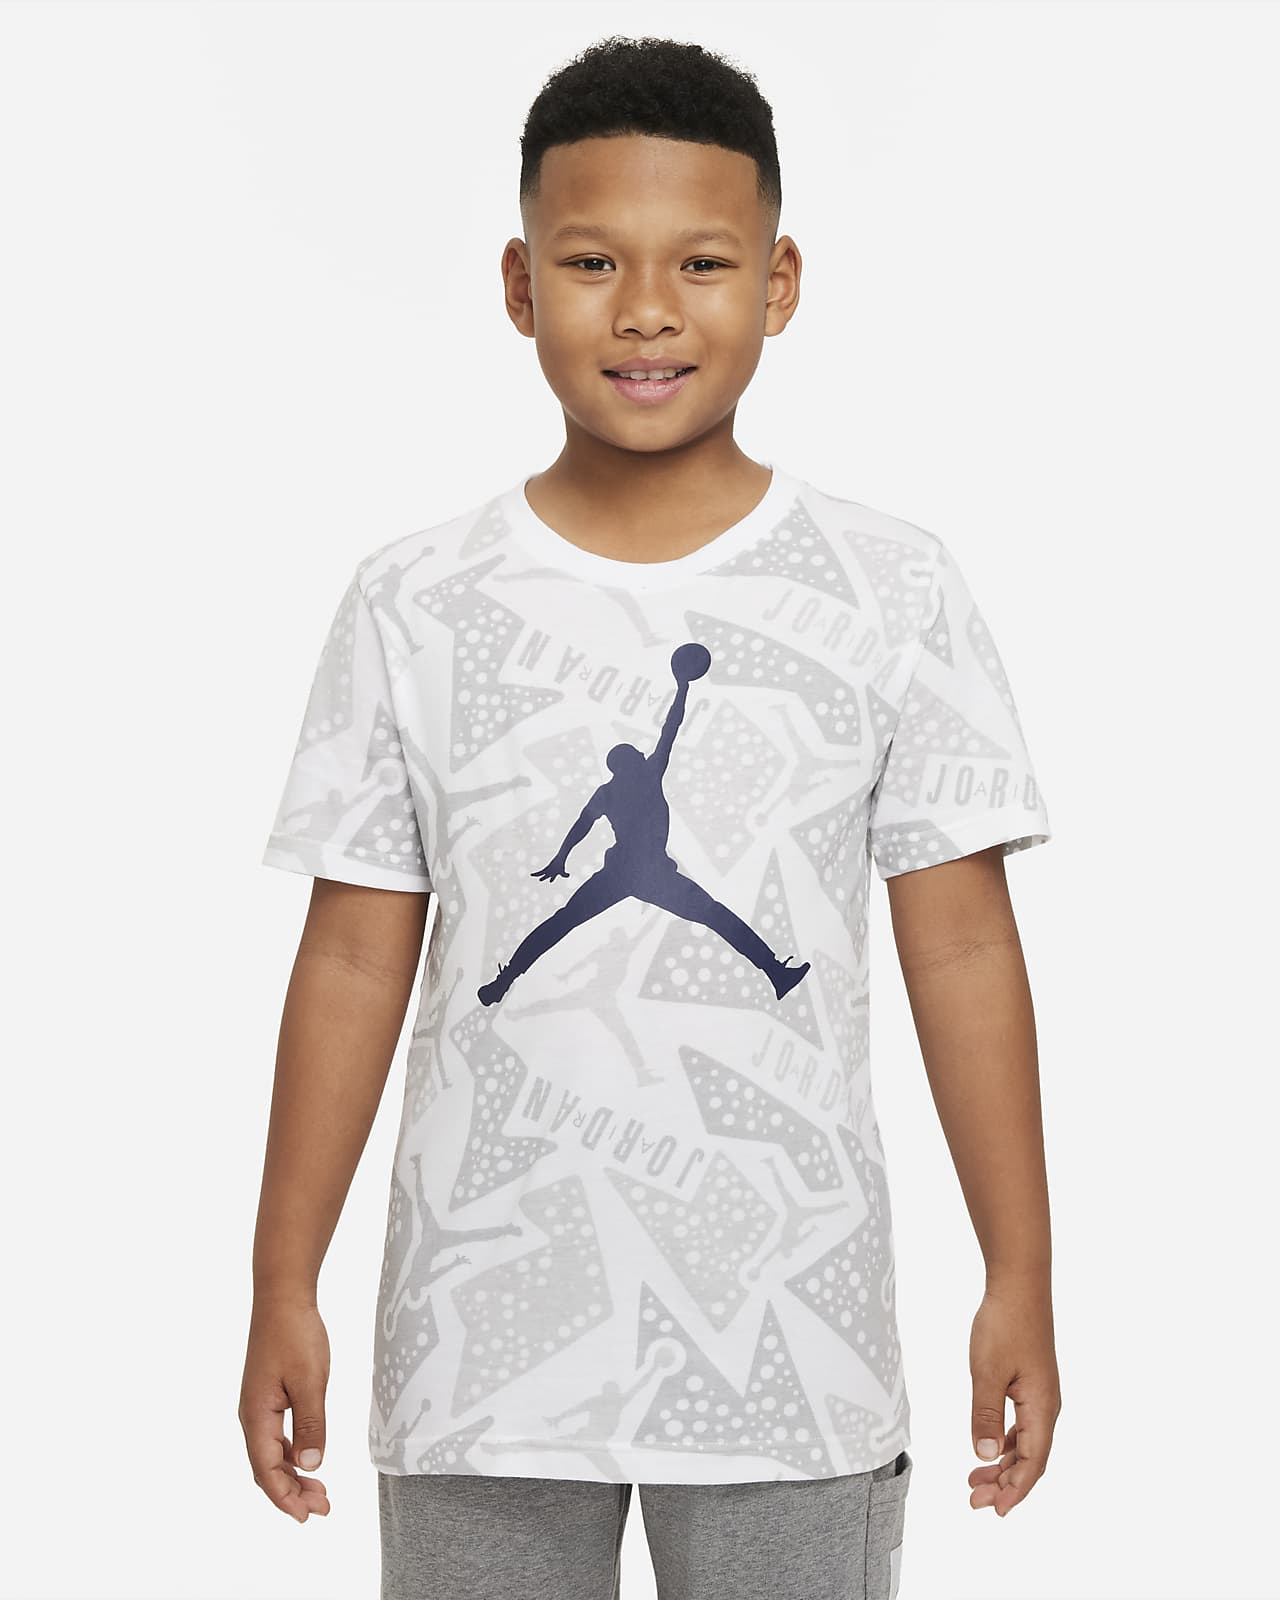 air jordan shirts for boys